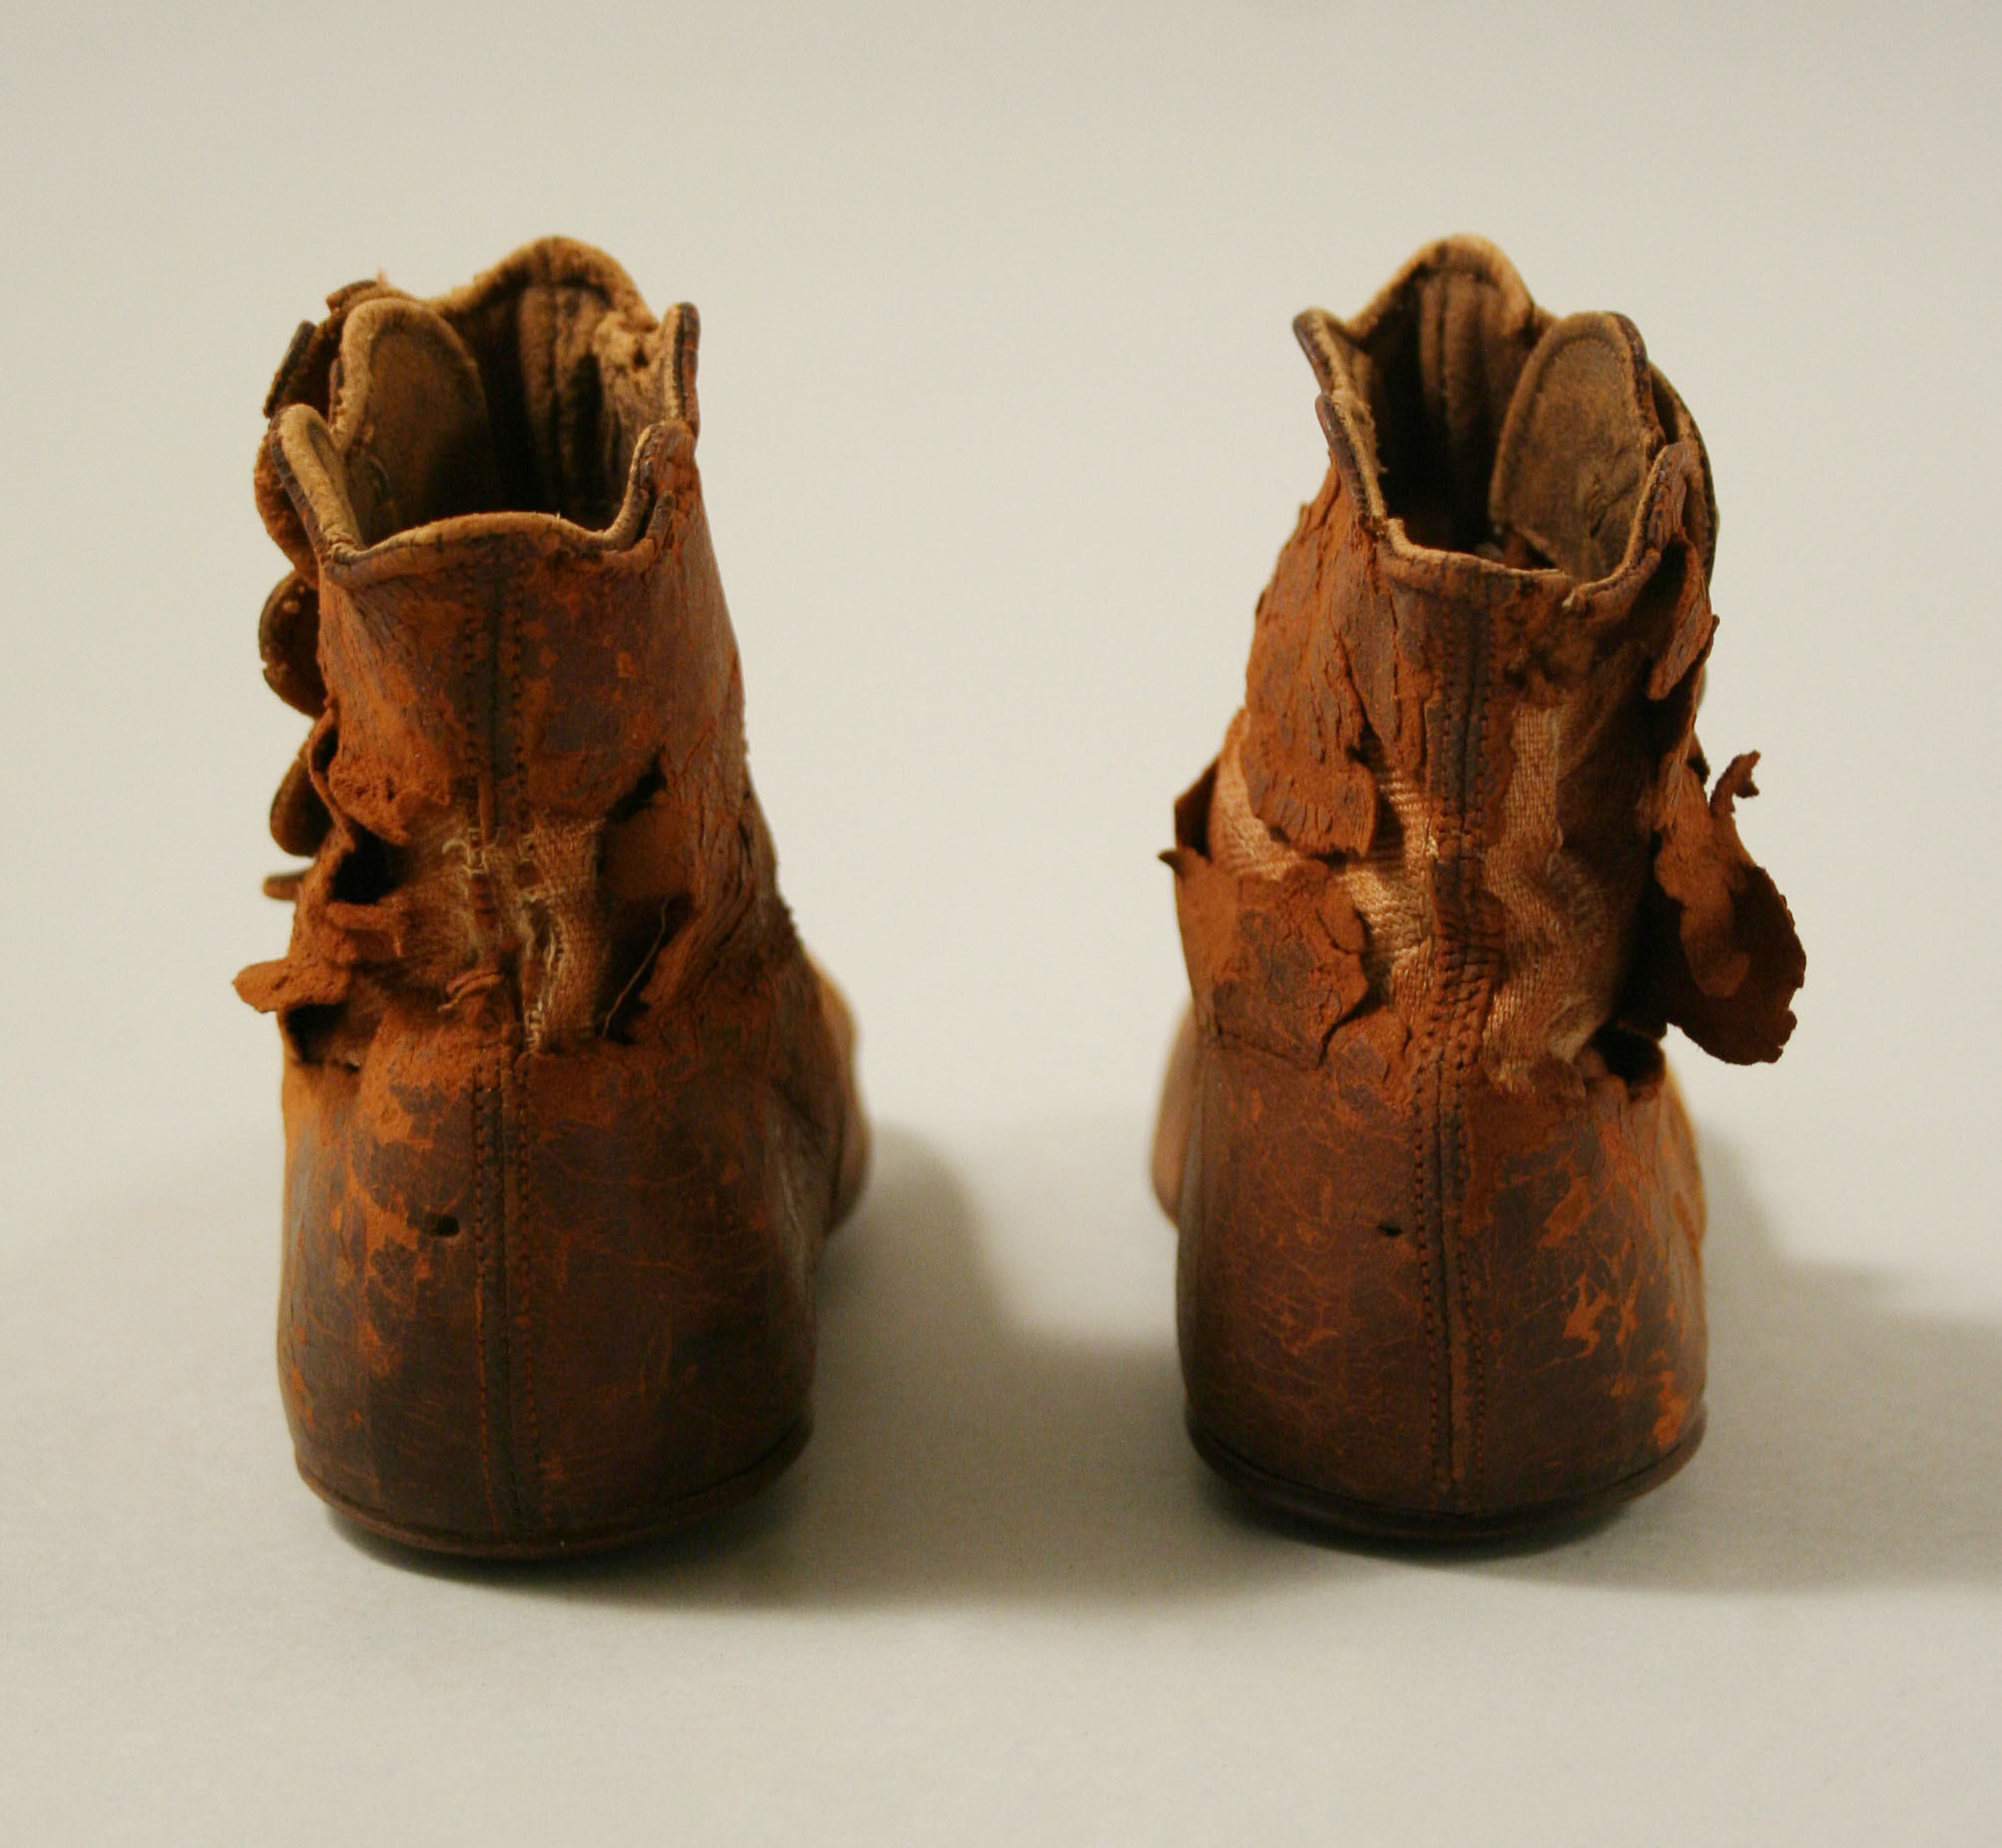 Boots | American | The Metropolitan Museum of Art